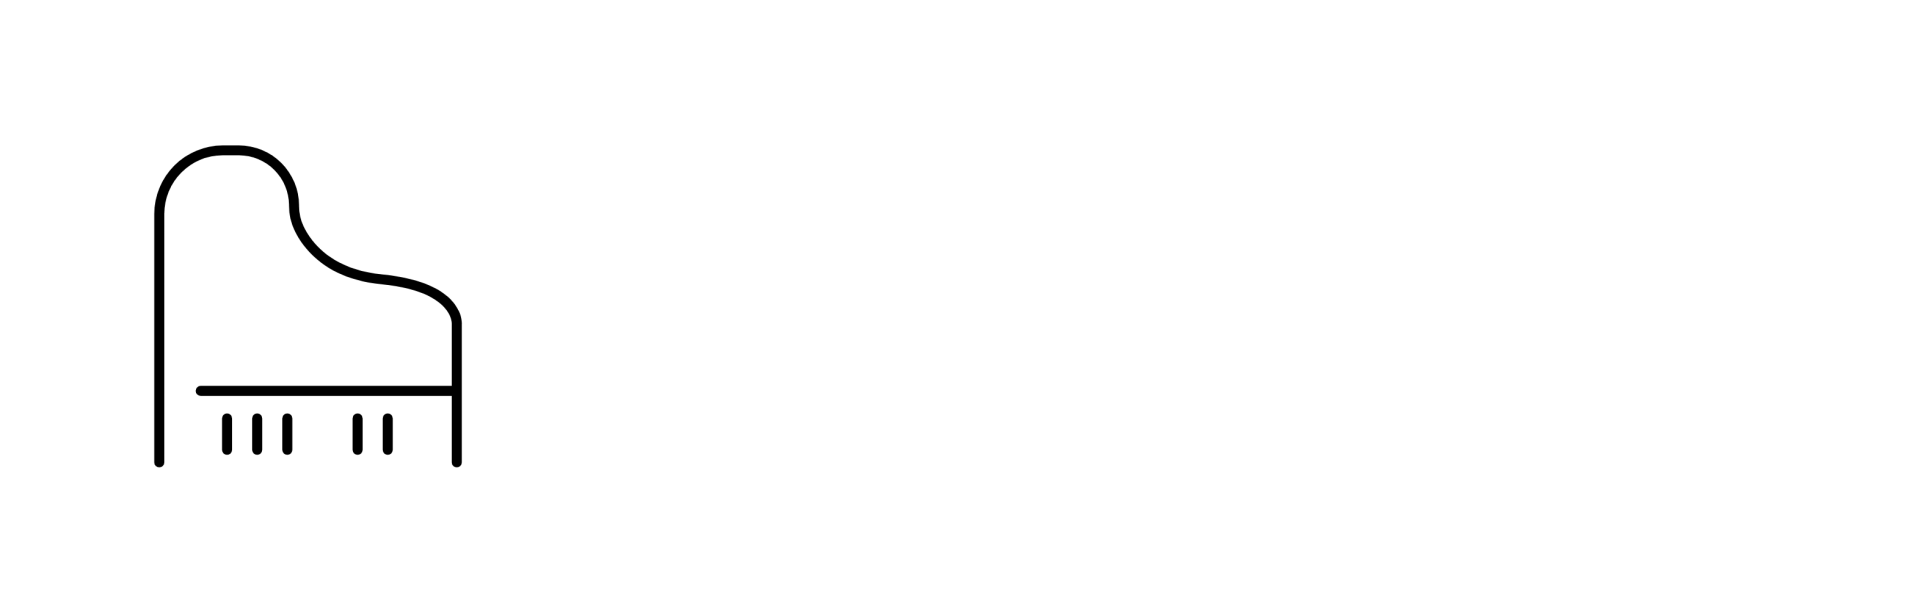 KonzMusikFestival Logo